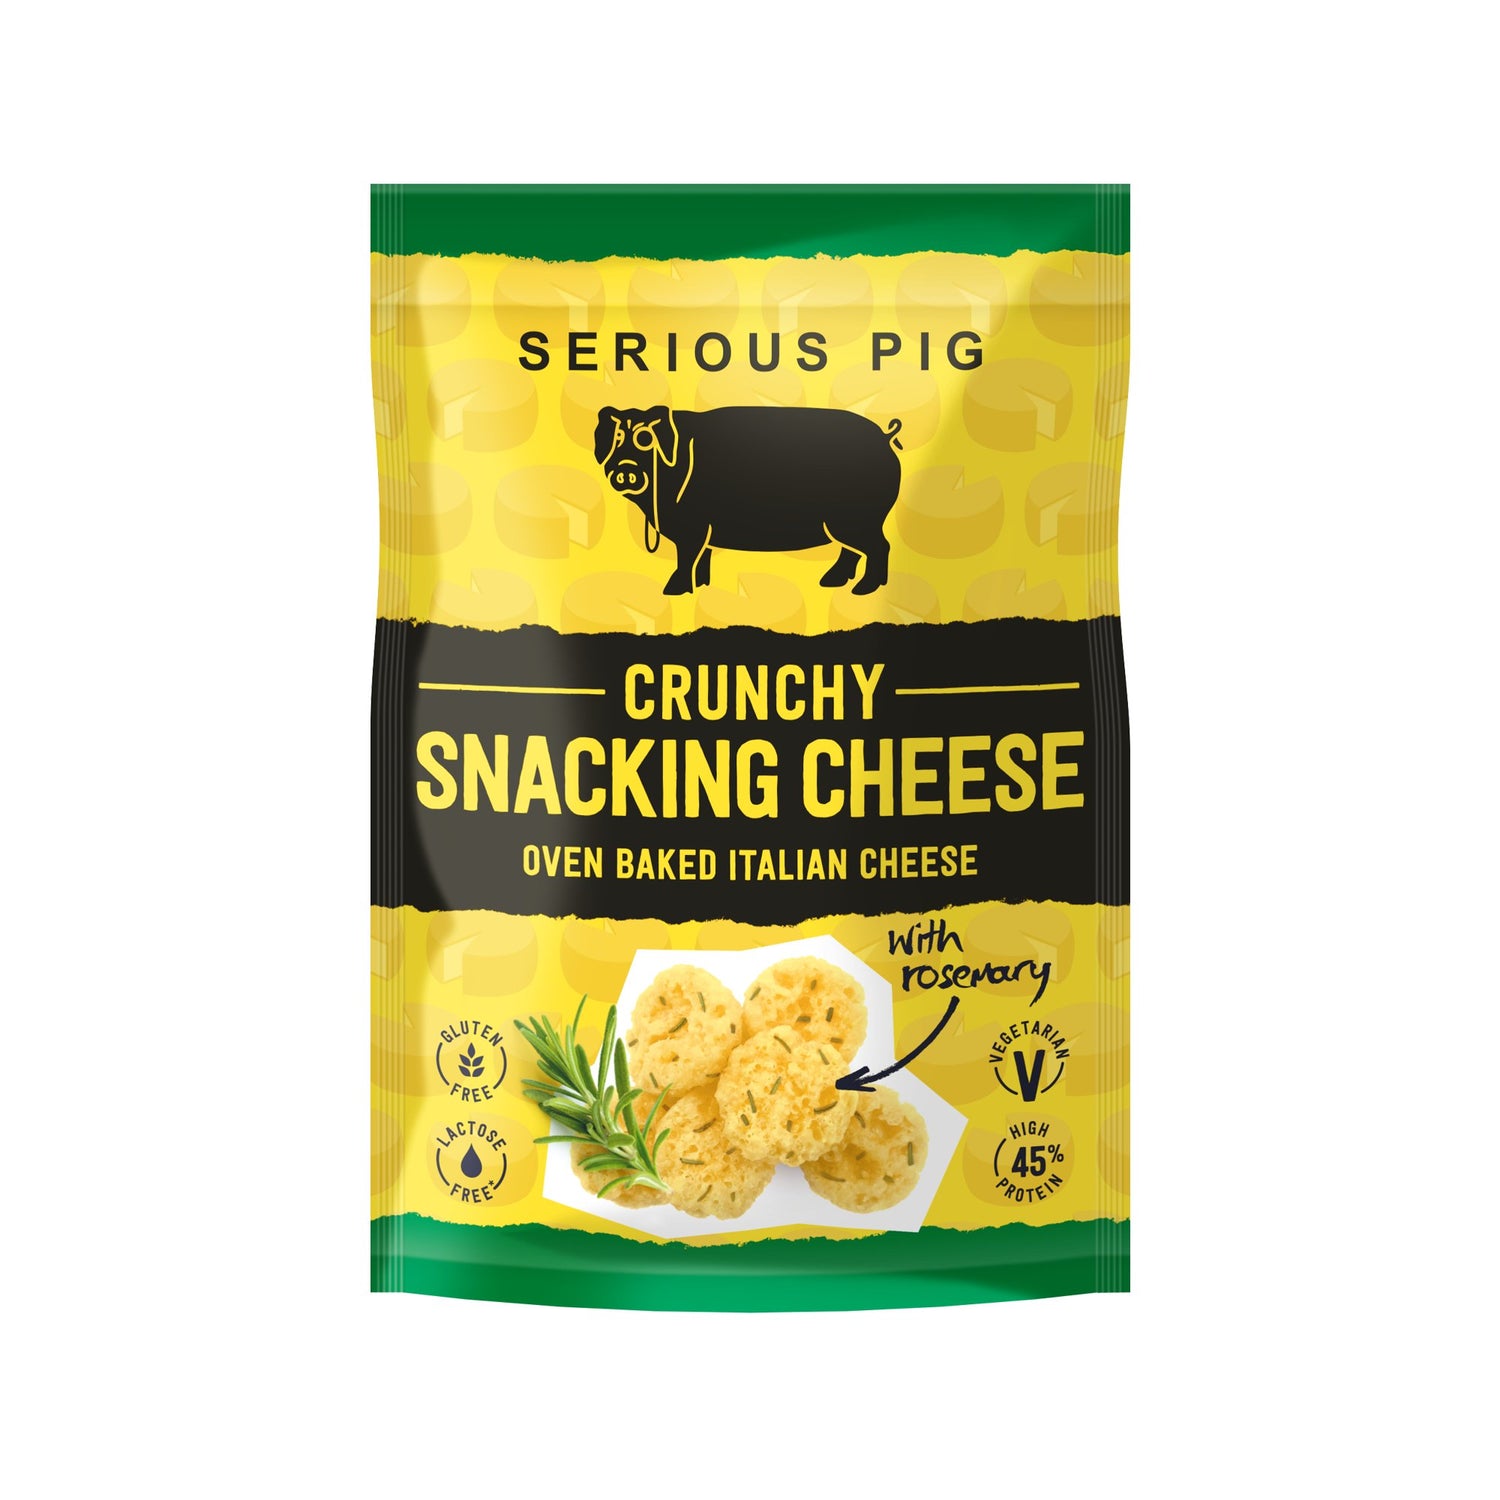 Serious Pig Crunchy Snacking Cheese x 4 okusi - Keto prijazno - theskinnyfoodco